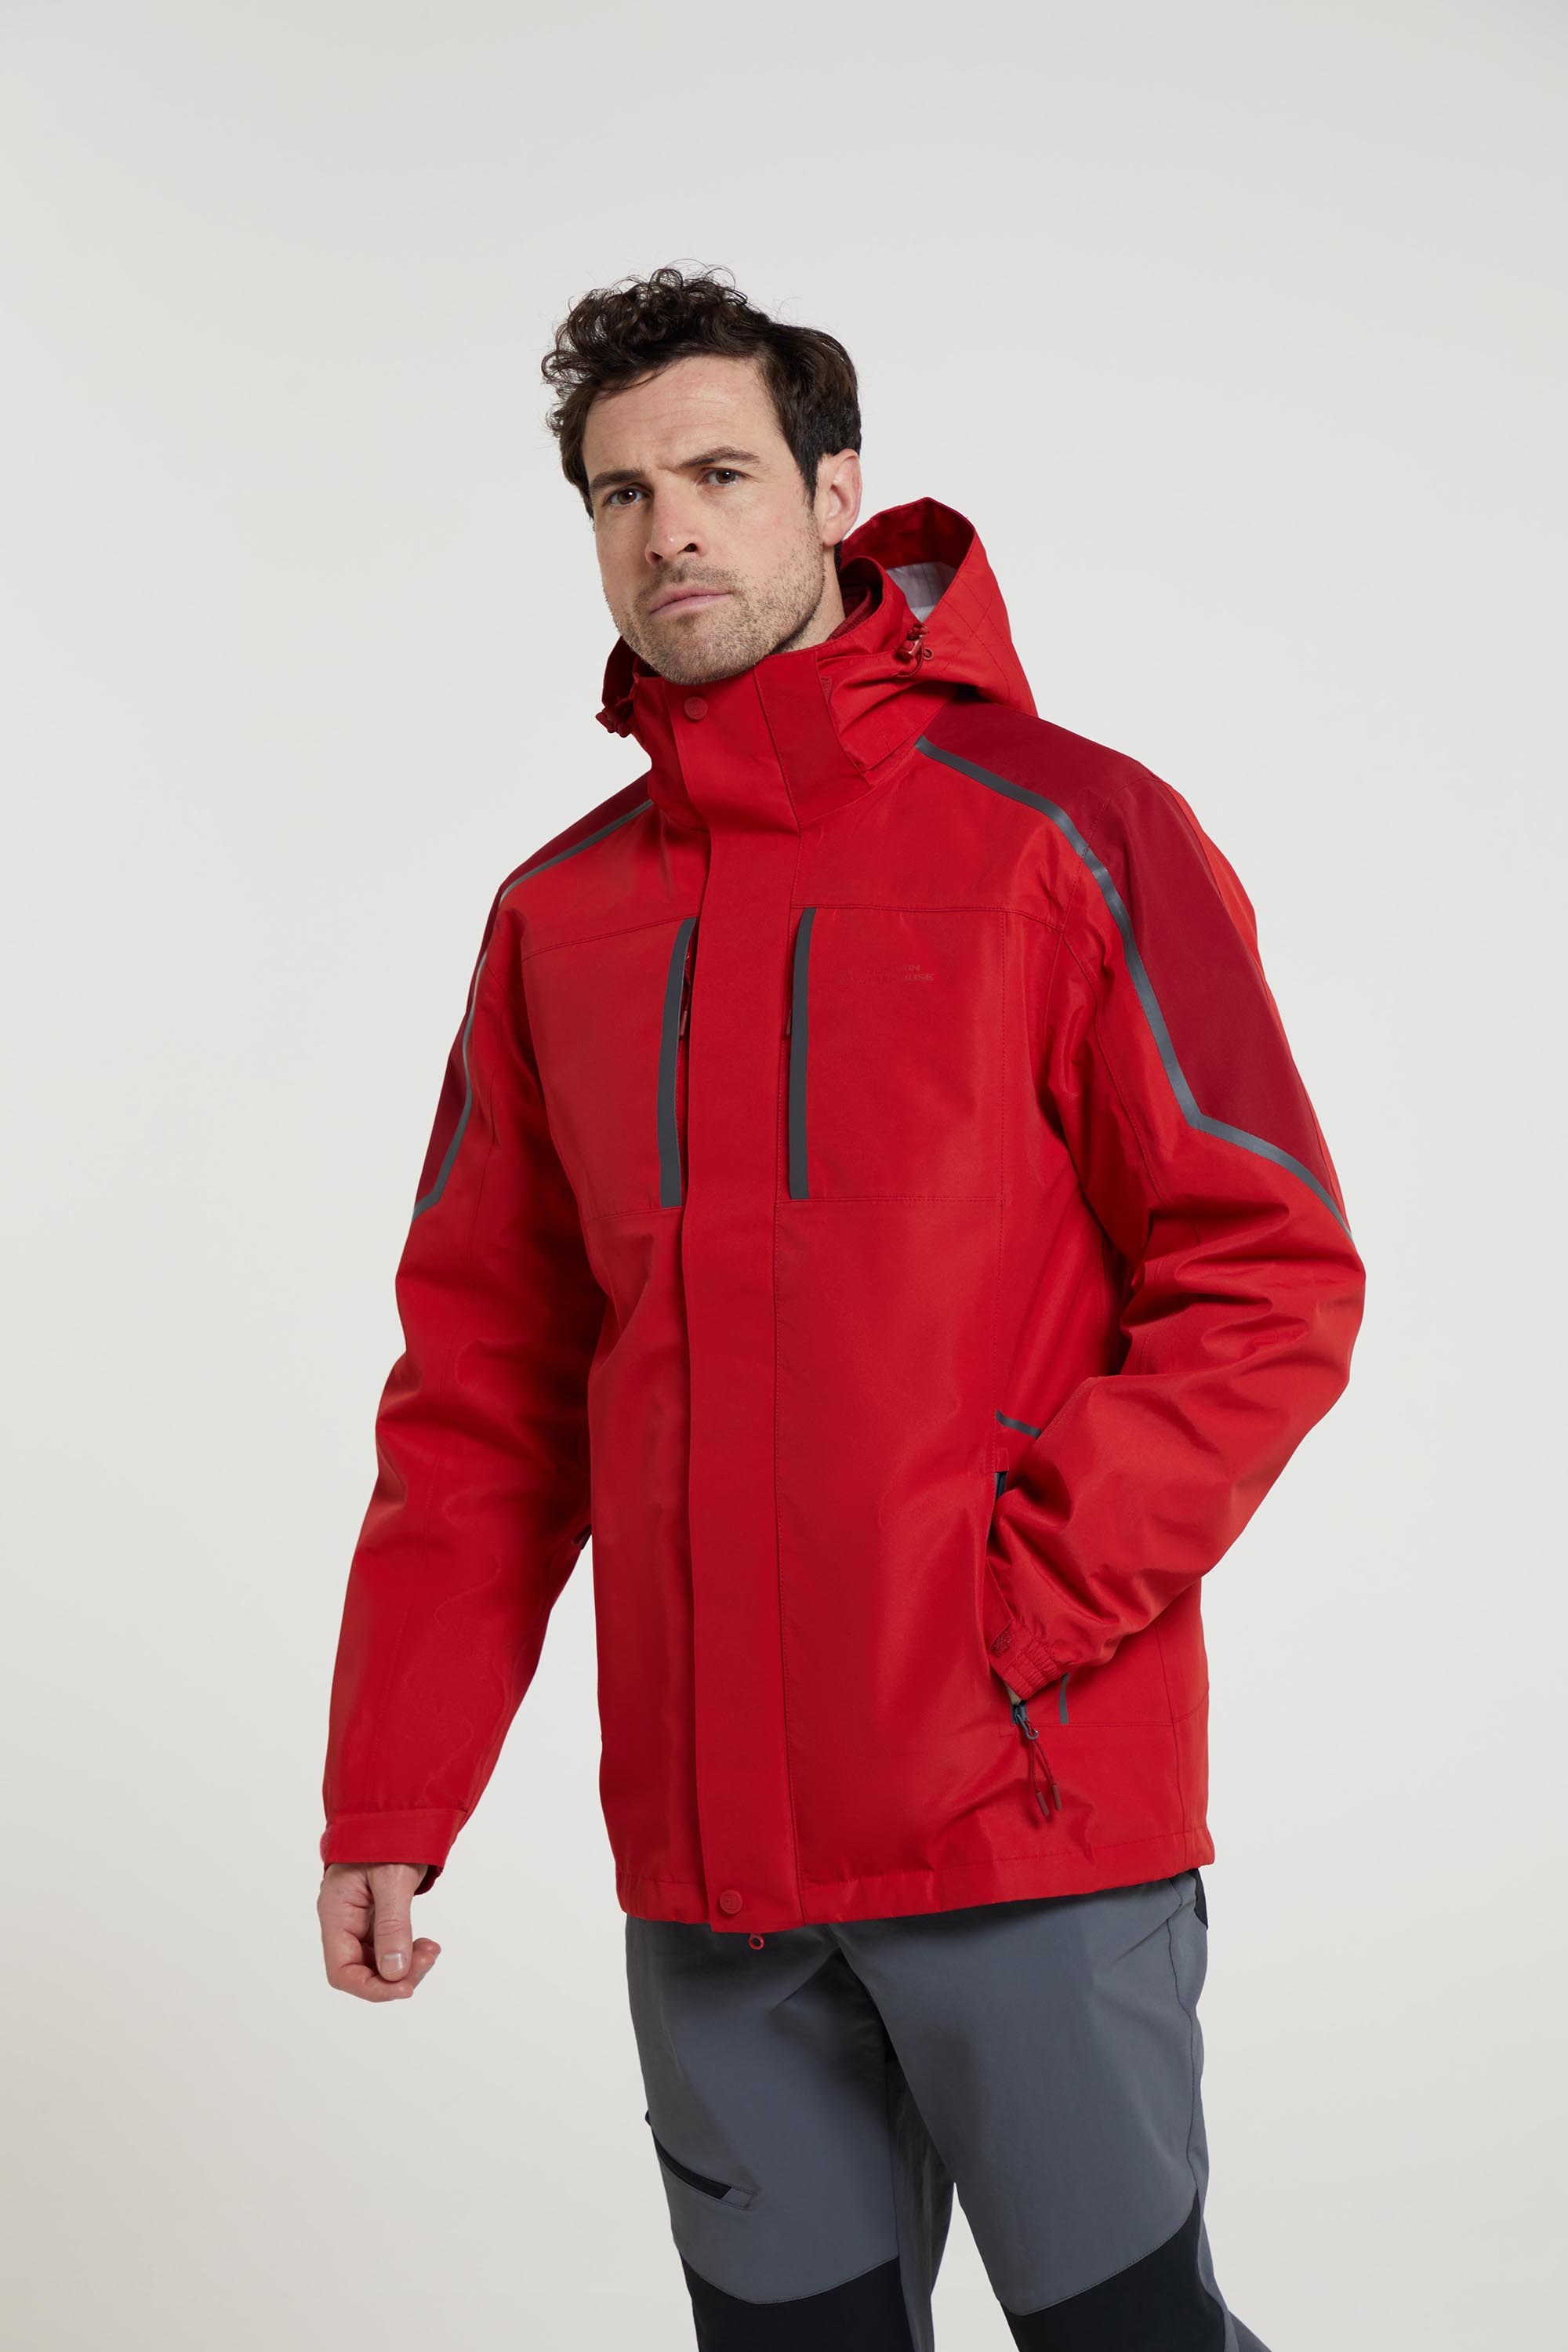 Fesfesfes Shiny Puffer Jacket for Men Causal Hooded Coat Reflective Padded  Jacket Winter Bomber Jacket Sale Clearance - Walmart.com